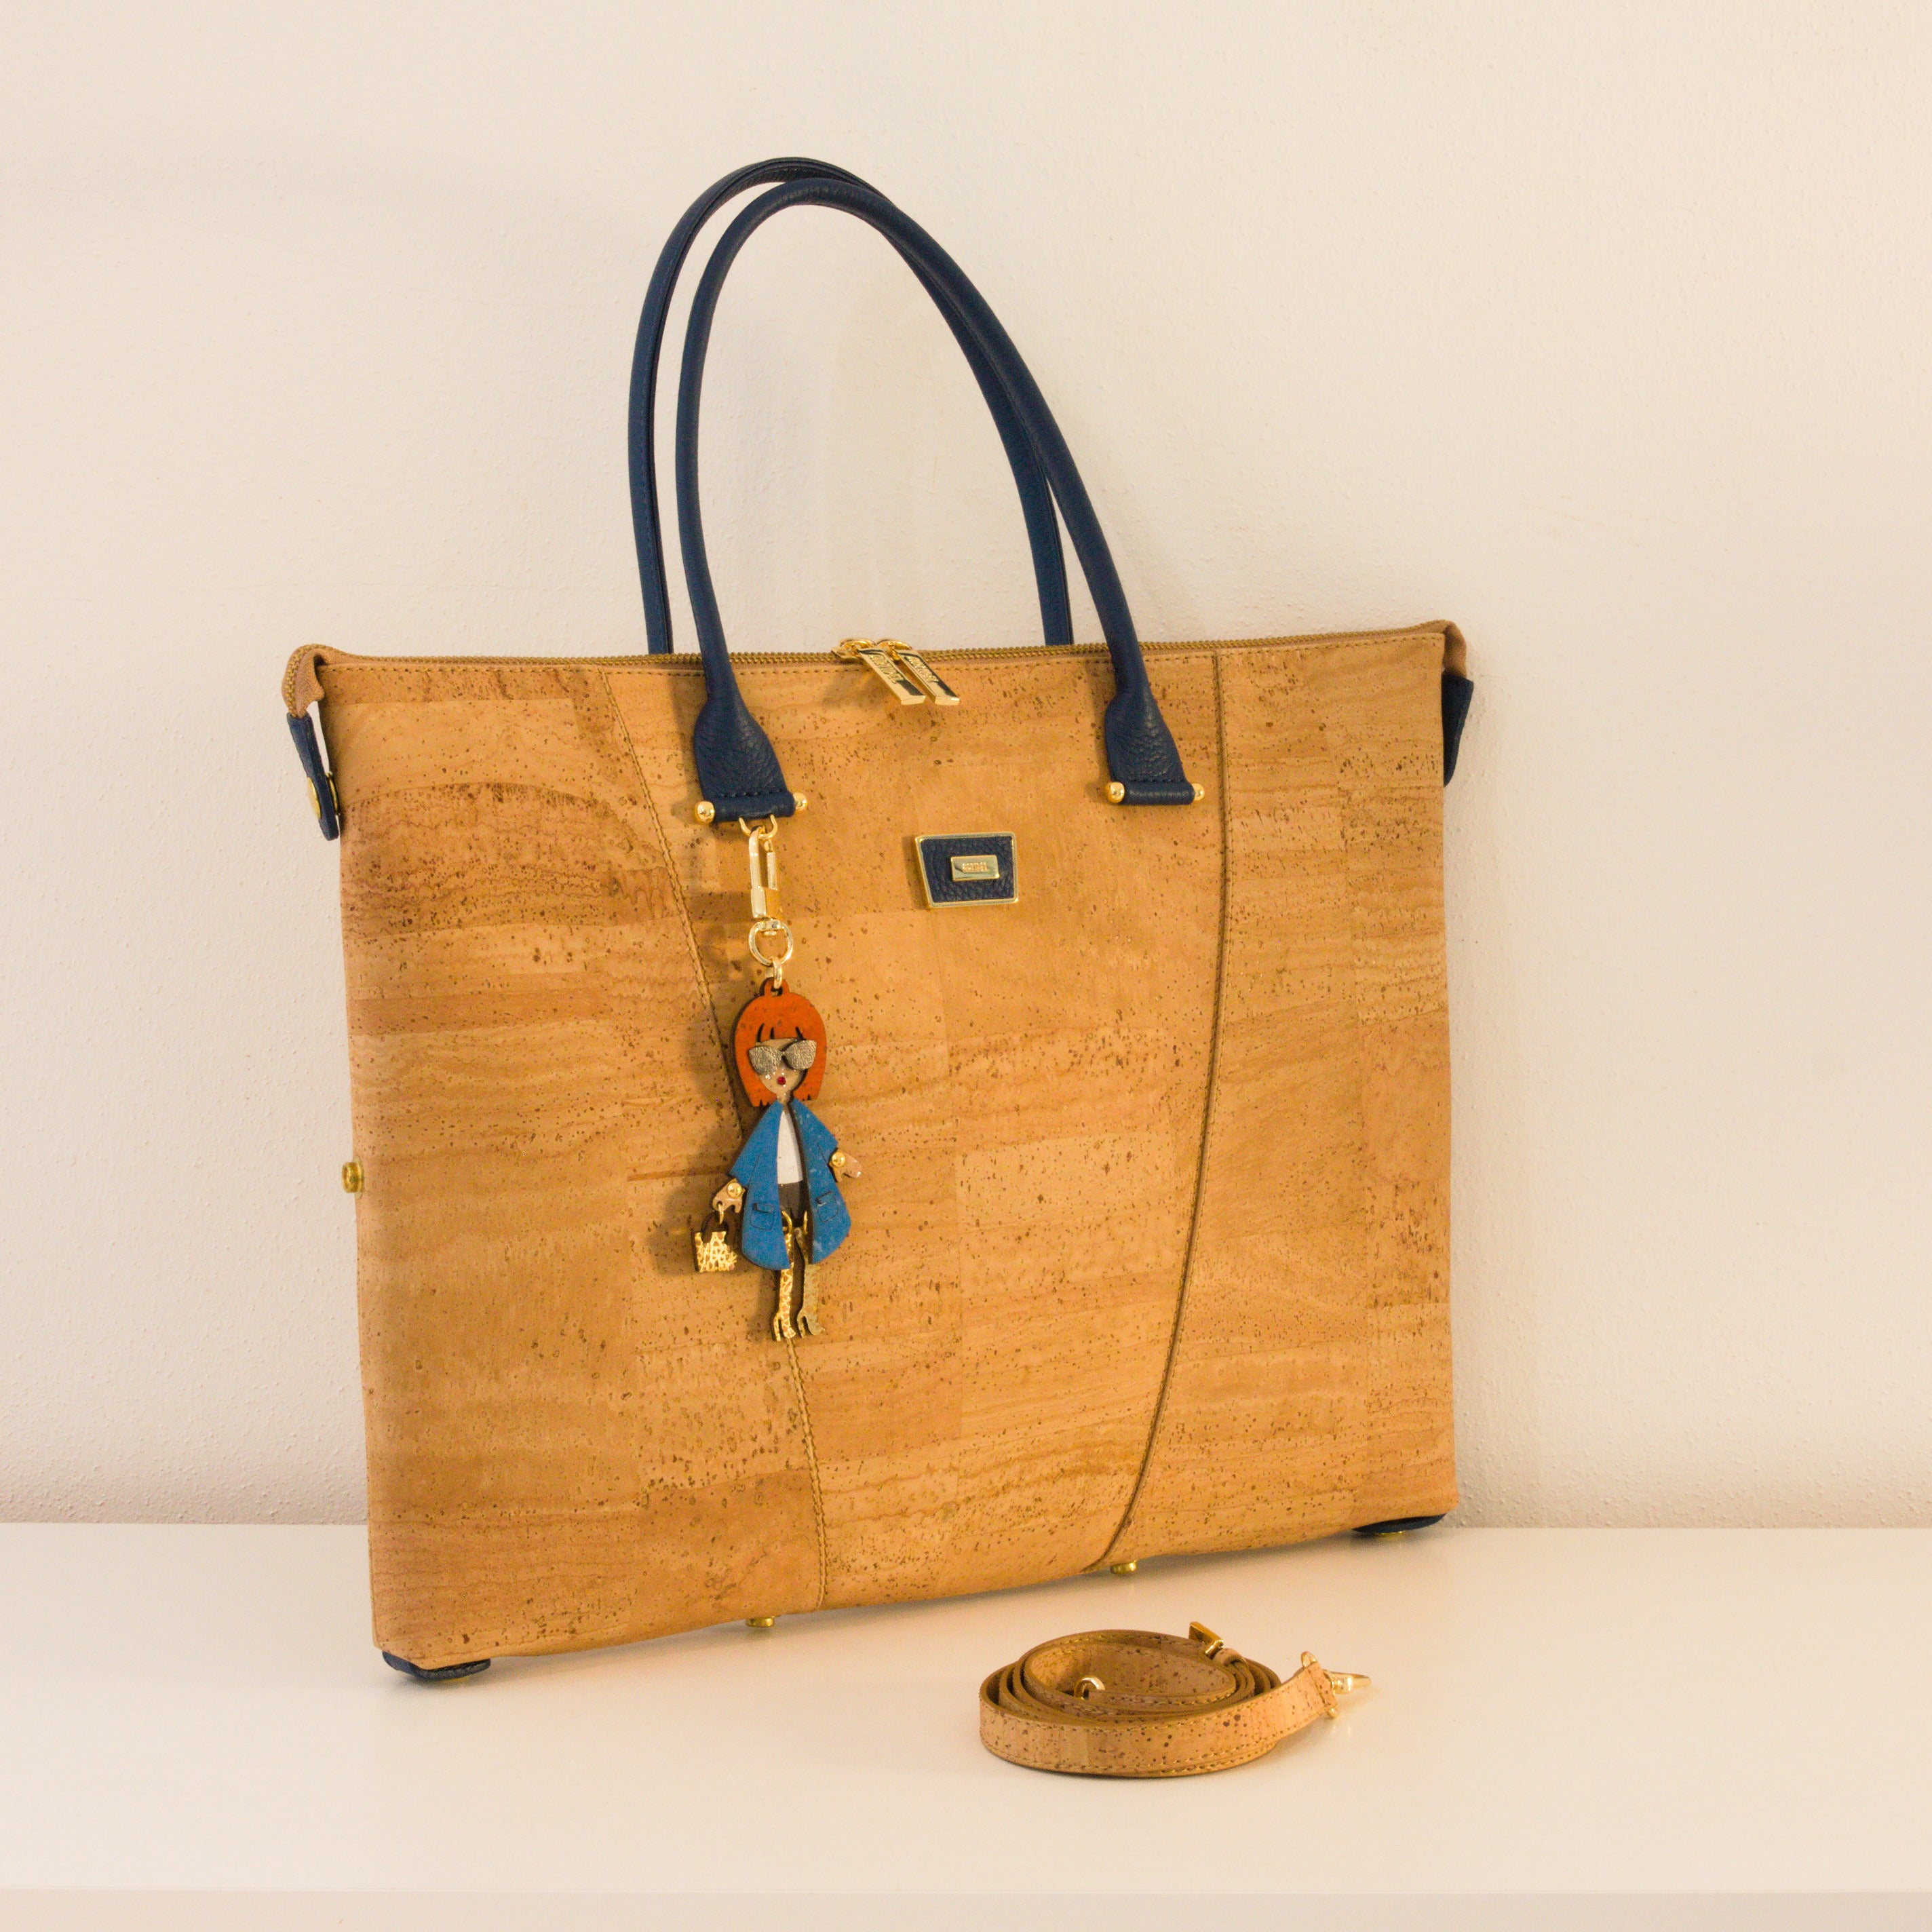 Cork handbag 3in1 * 2 sizes * different designs * shoulder bag for women * crossbody * shopper * handmade in Portugal